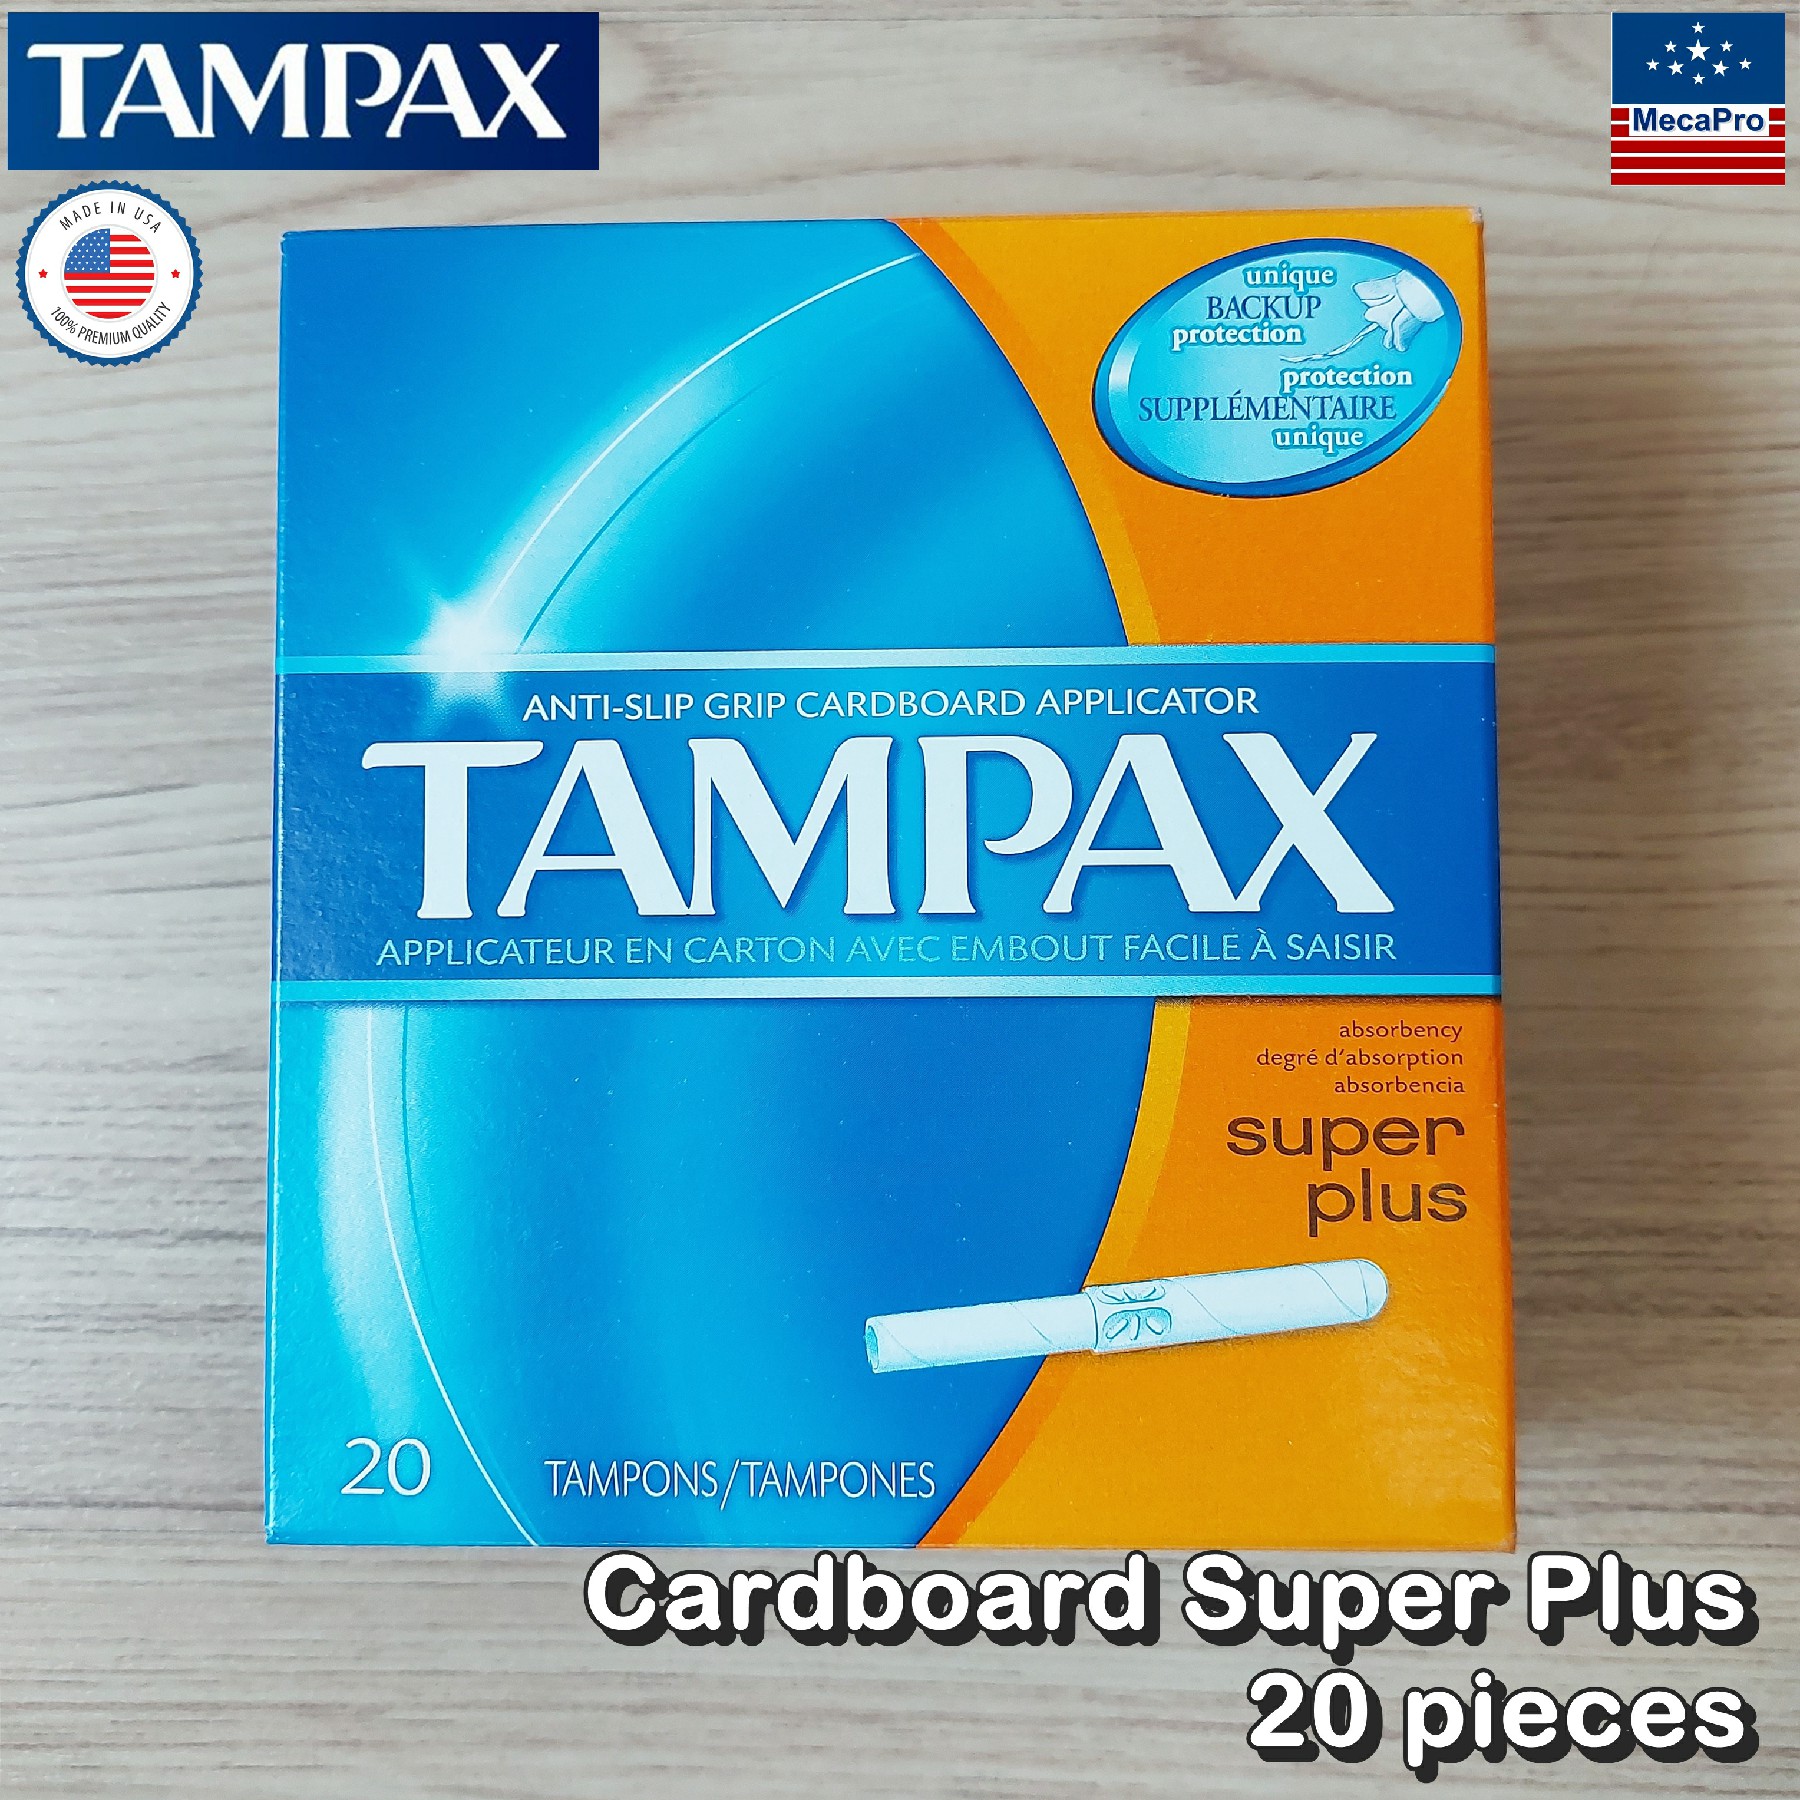 Tampax® Cardboard Super Plus Tampons 20 pieces ผ้าอนามัยแบบสอด 20 ชิ้น เหมาะกับวันมามาก